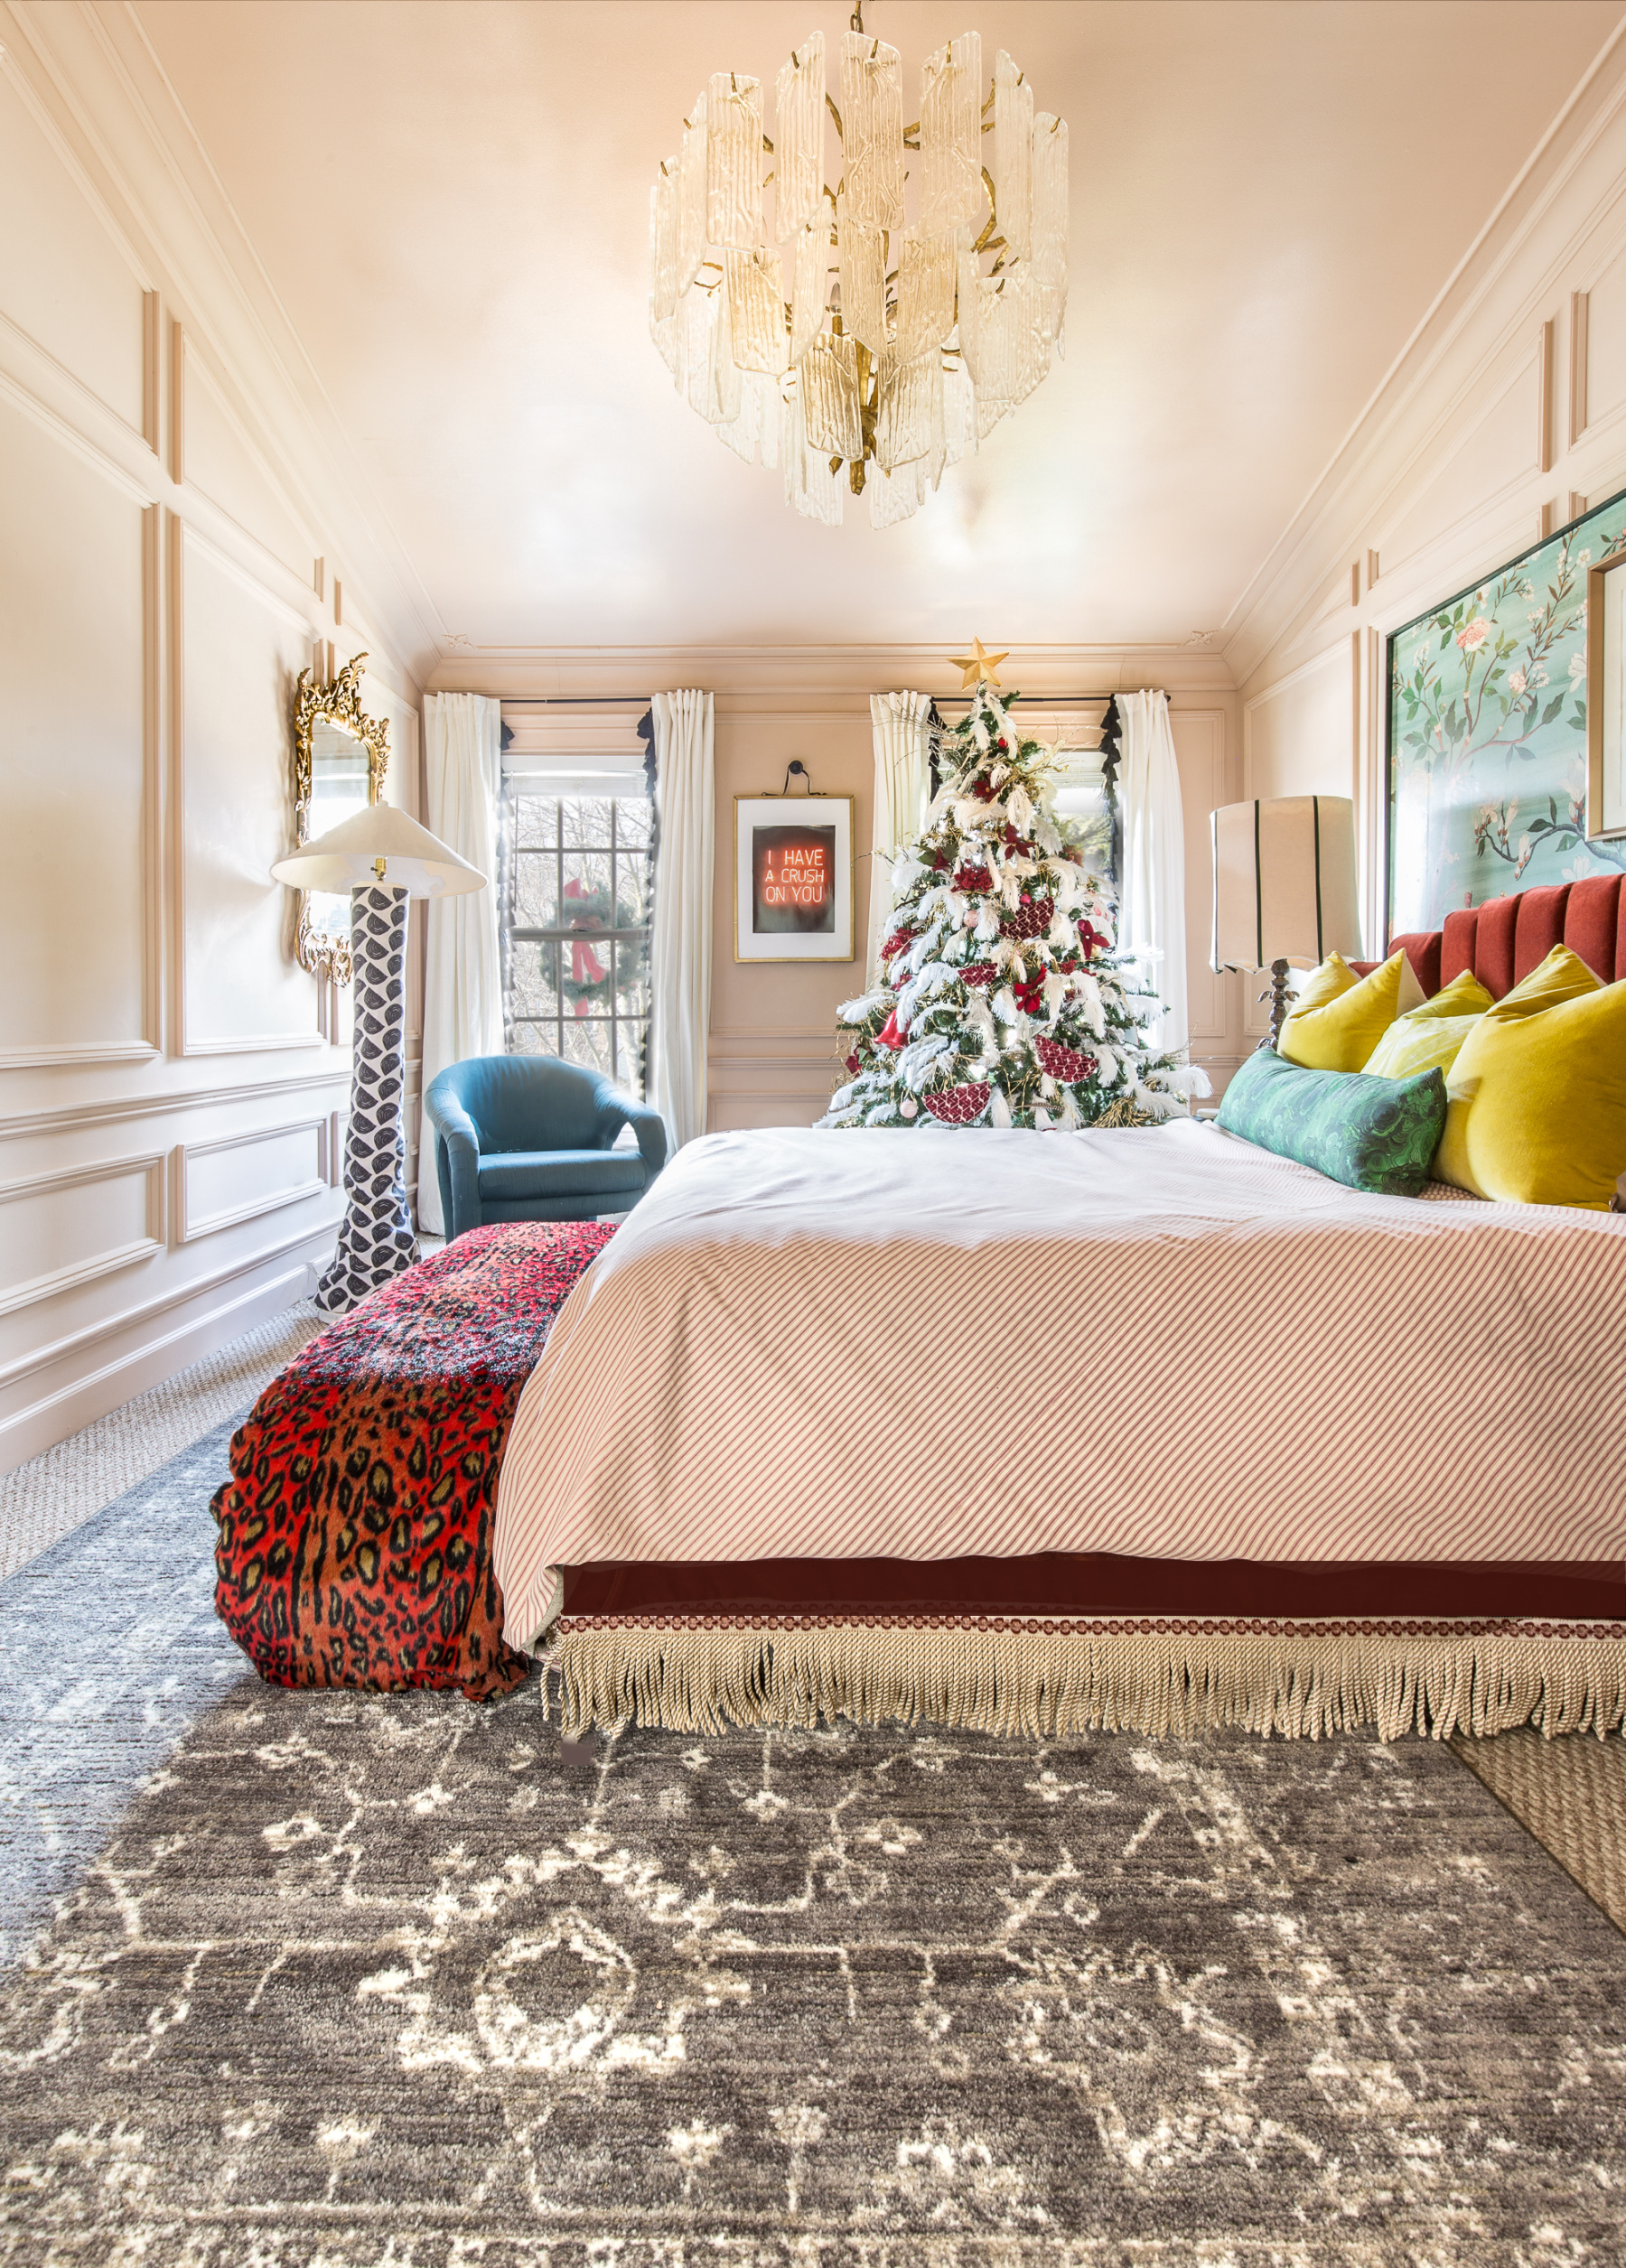 holiday bedroom decorations, living room decor, Christmas tree, main bedroom, primary bedroom, glamorous bedroom, setting plaster, farrow and ball, diy headboard